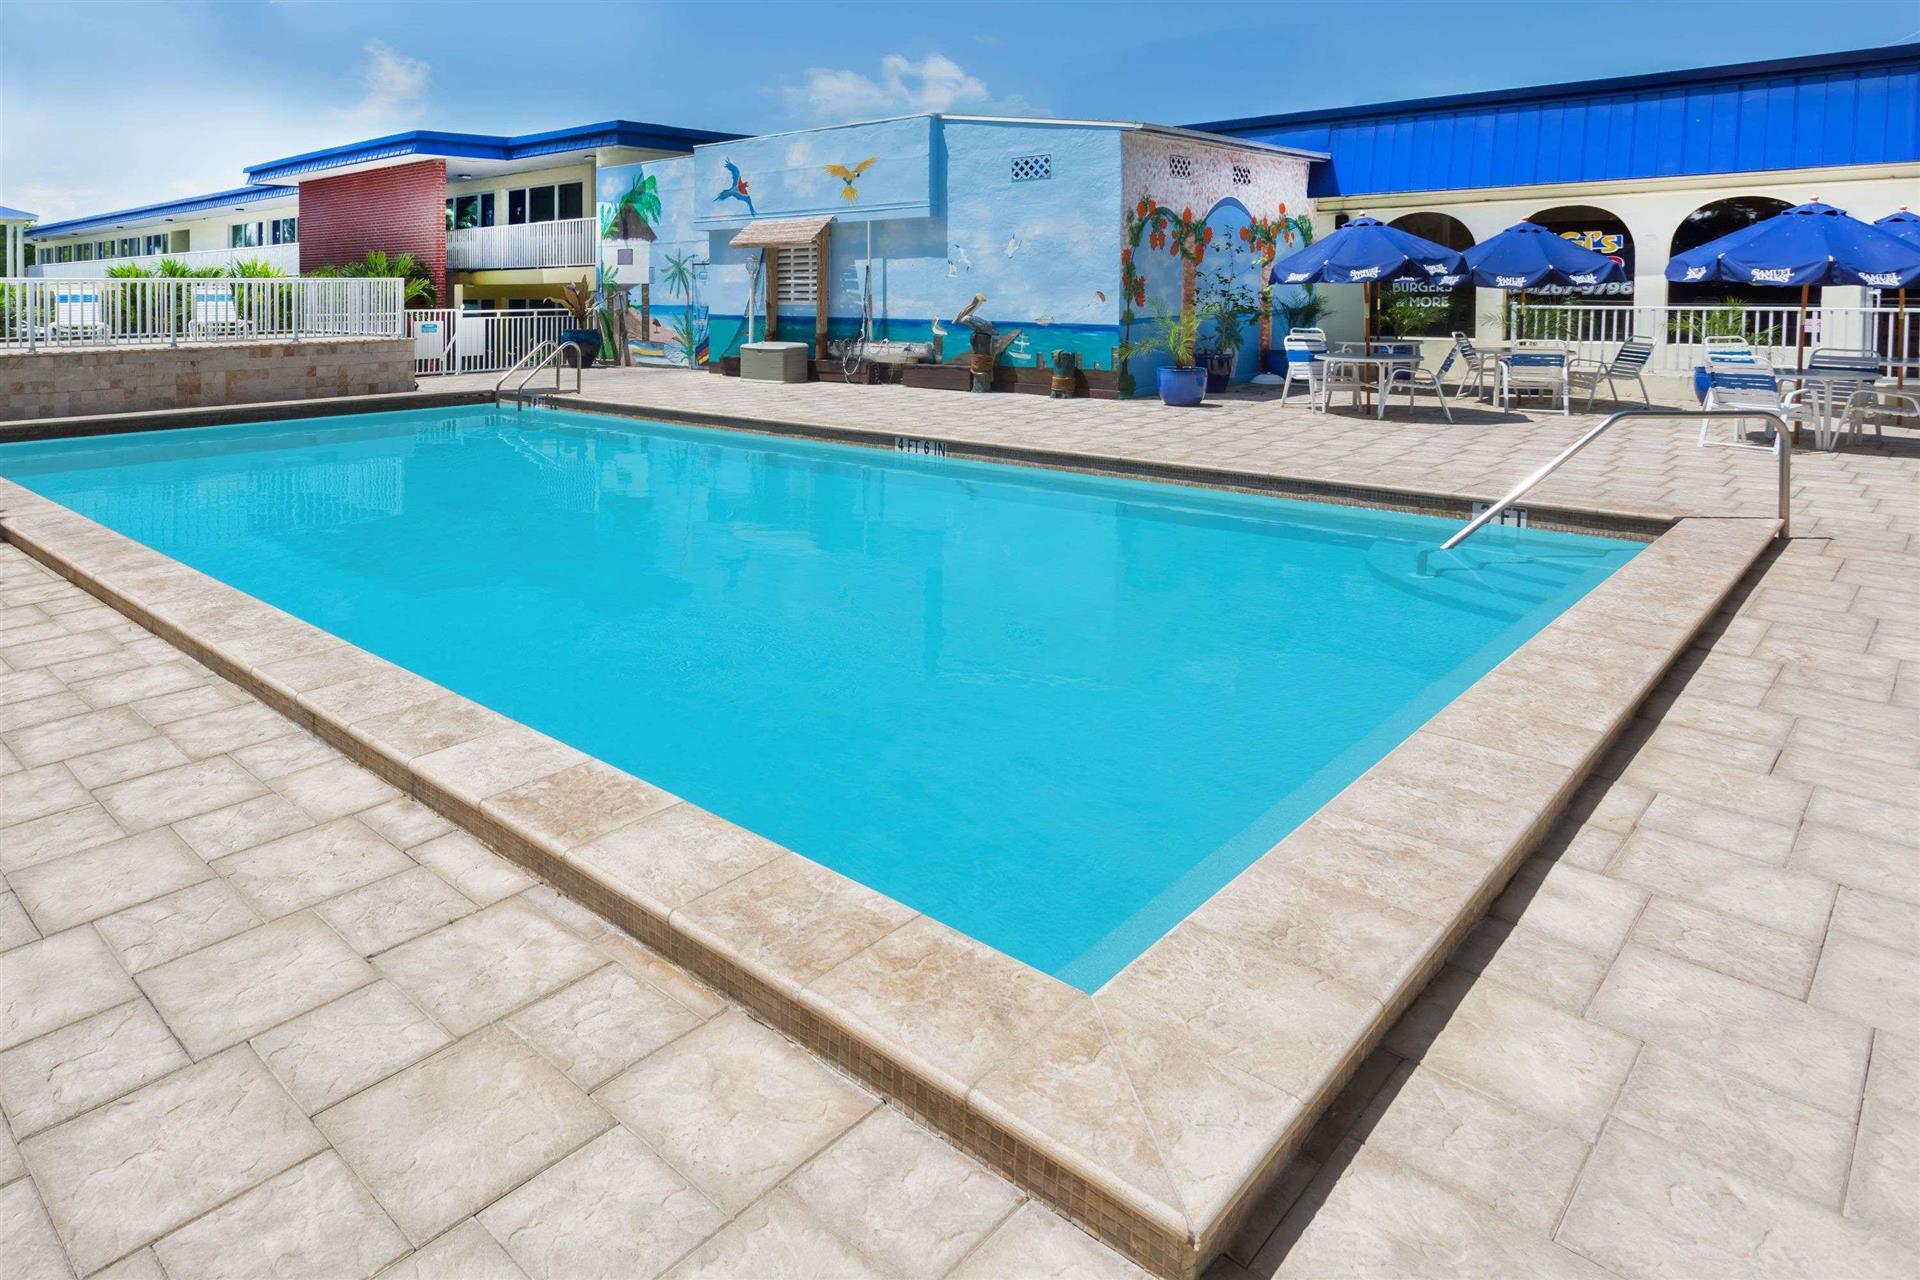 Days Inn by Wyndham Fort Myers Springs Resort in Fort Myers, FL